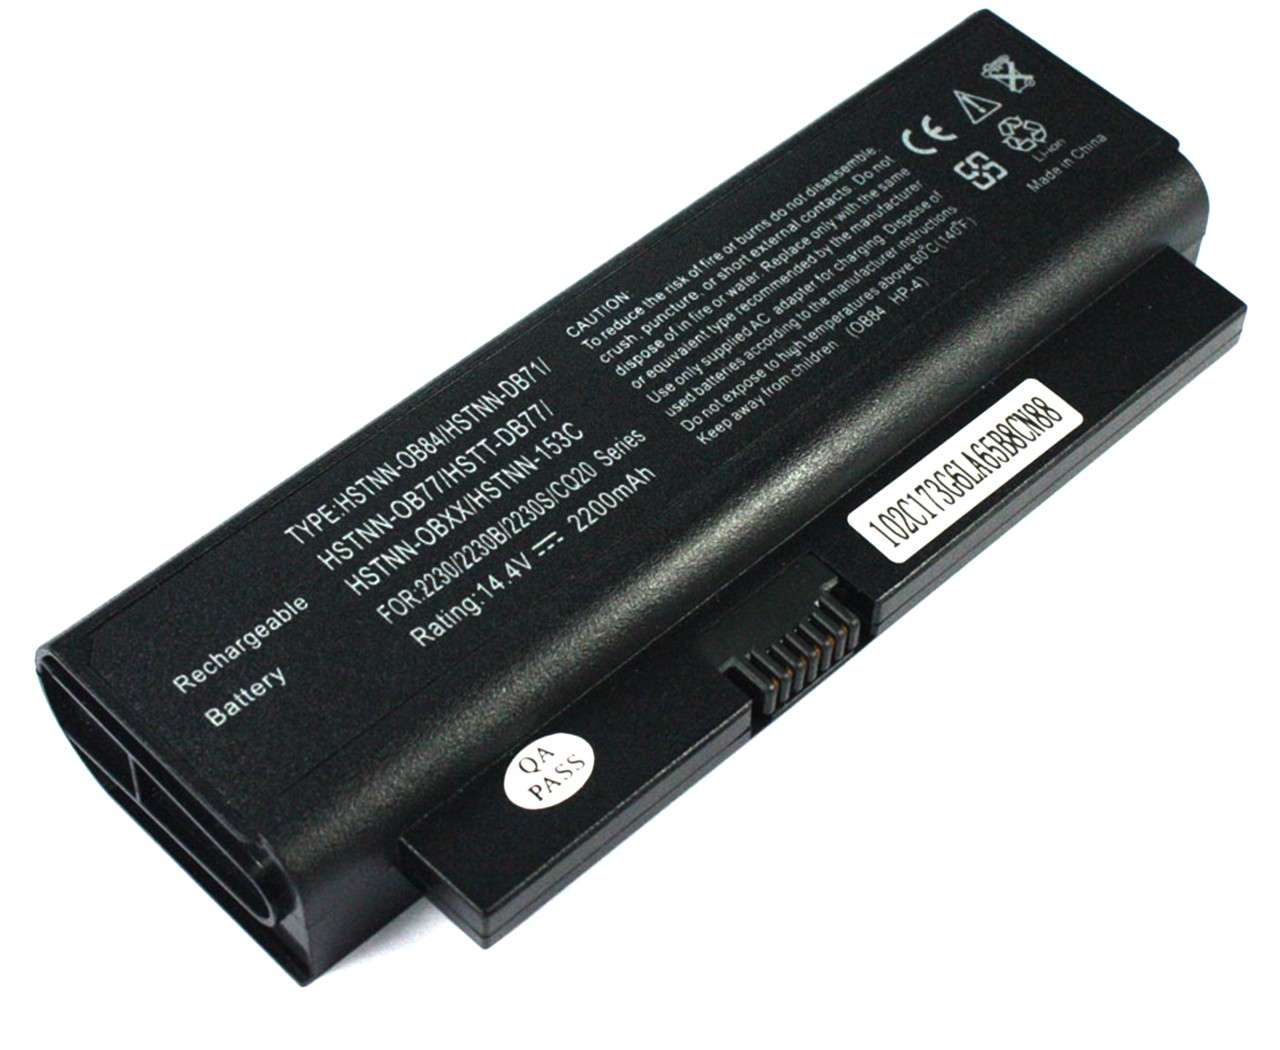 Baterie Compaq Presario CQ20 330TU HP-Compaq